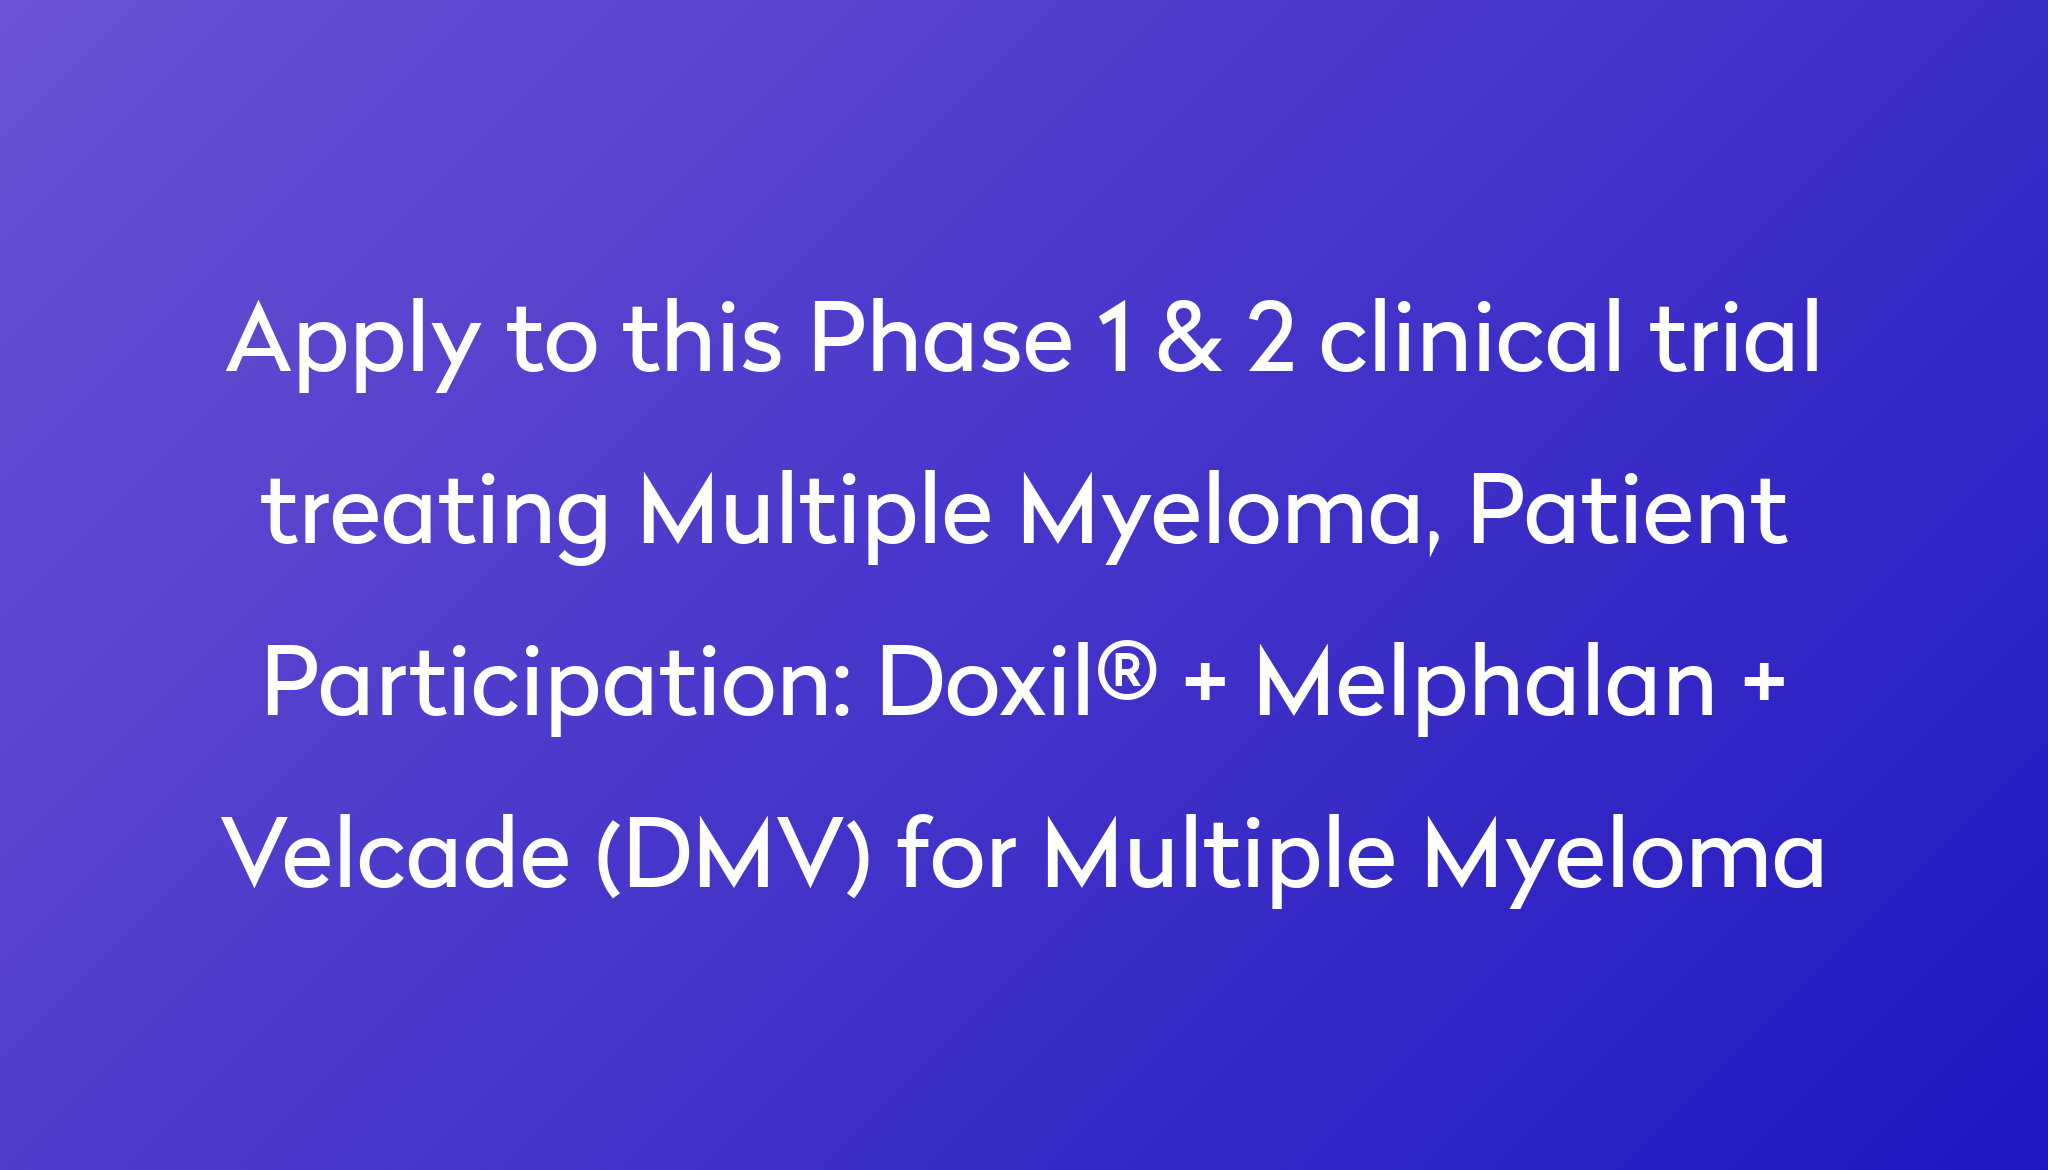 Doxil® + Melphalan + Velcade (DMV) for Multiple Myeloma Clinical Trial